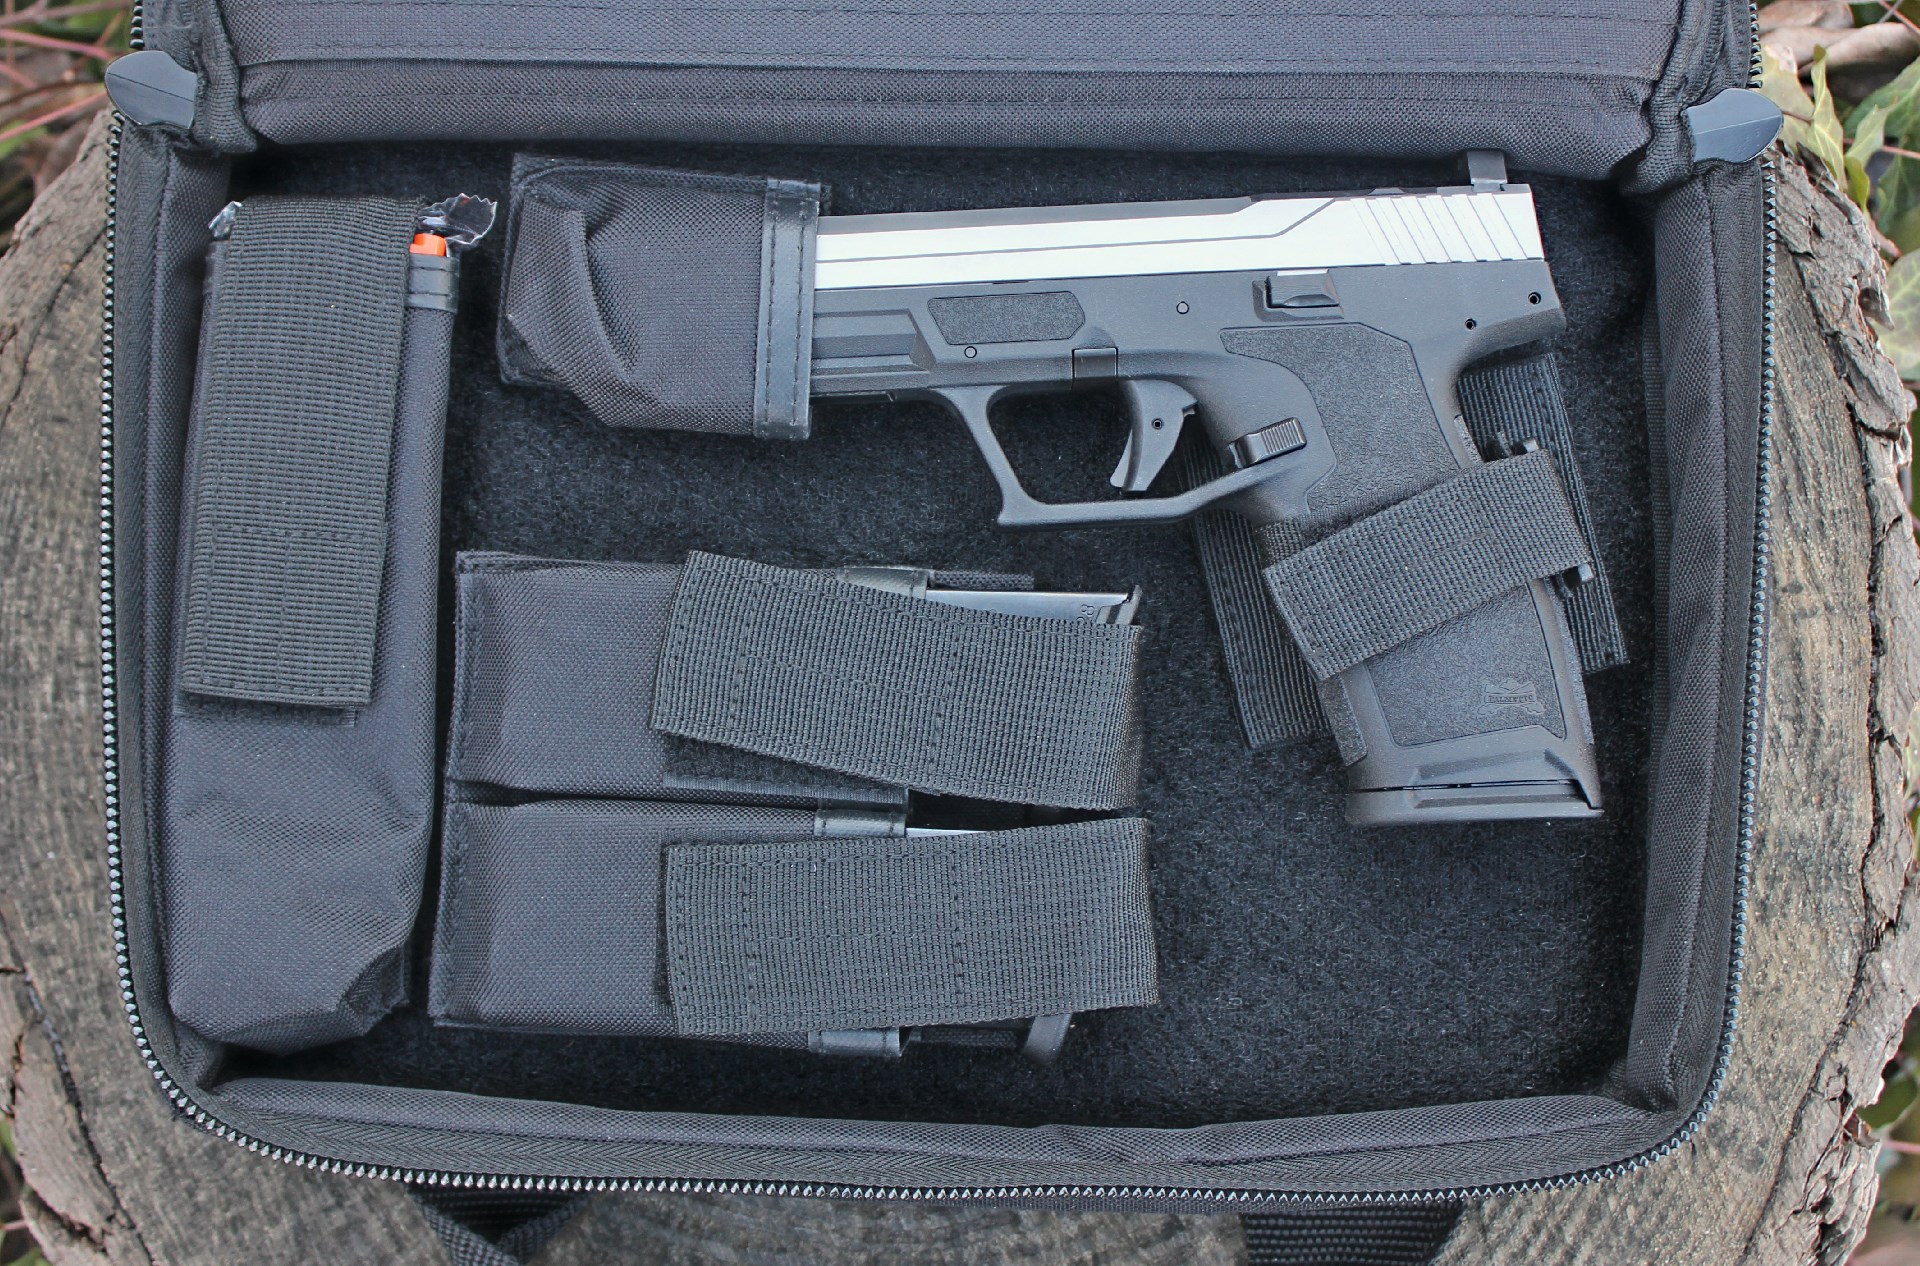 palmetto state armory 5.7 rock pistol in nylon case on log